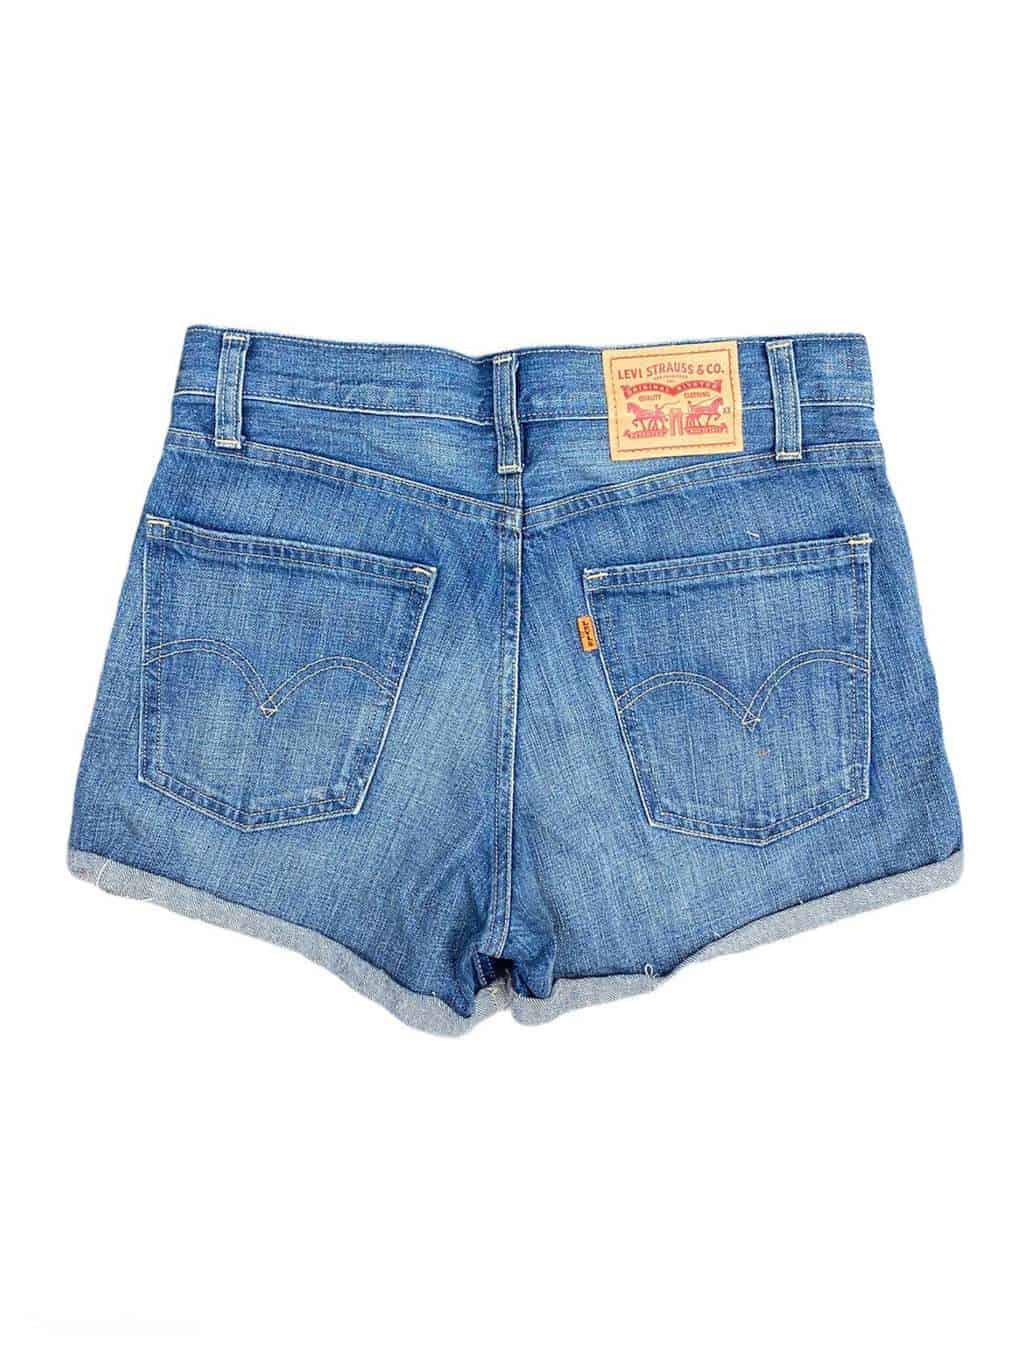 Women's Vintage Levis Denim Shorts in Mid Wash Blue - S / M - St Cyr Vintage